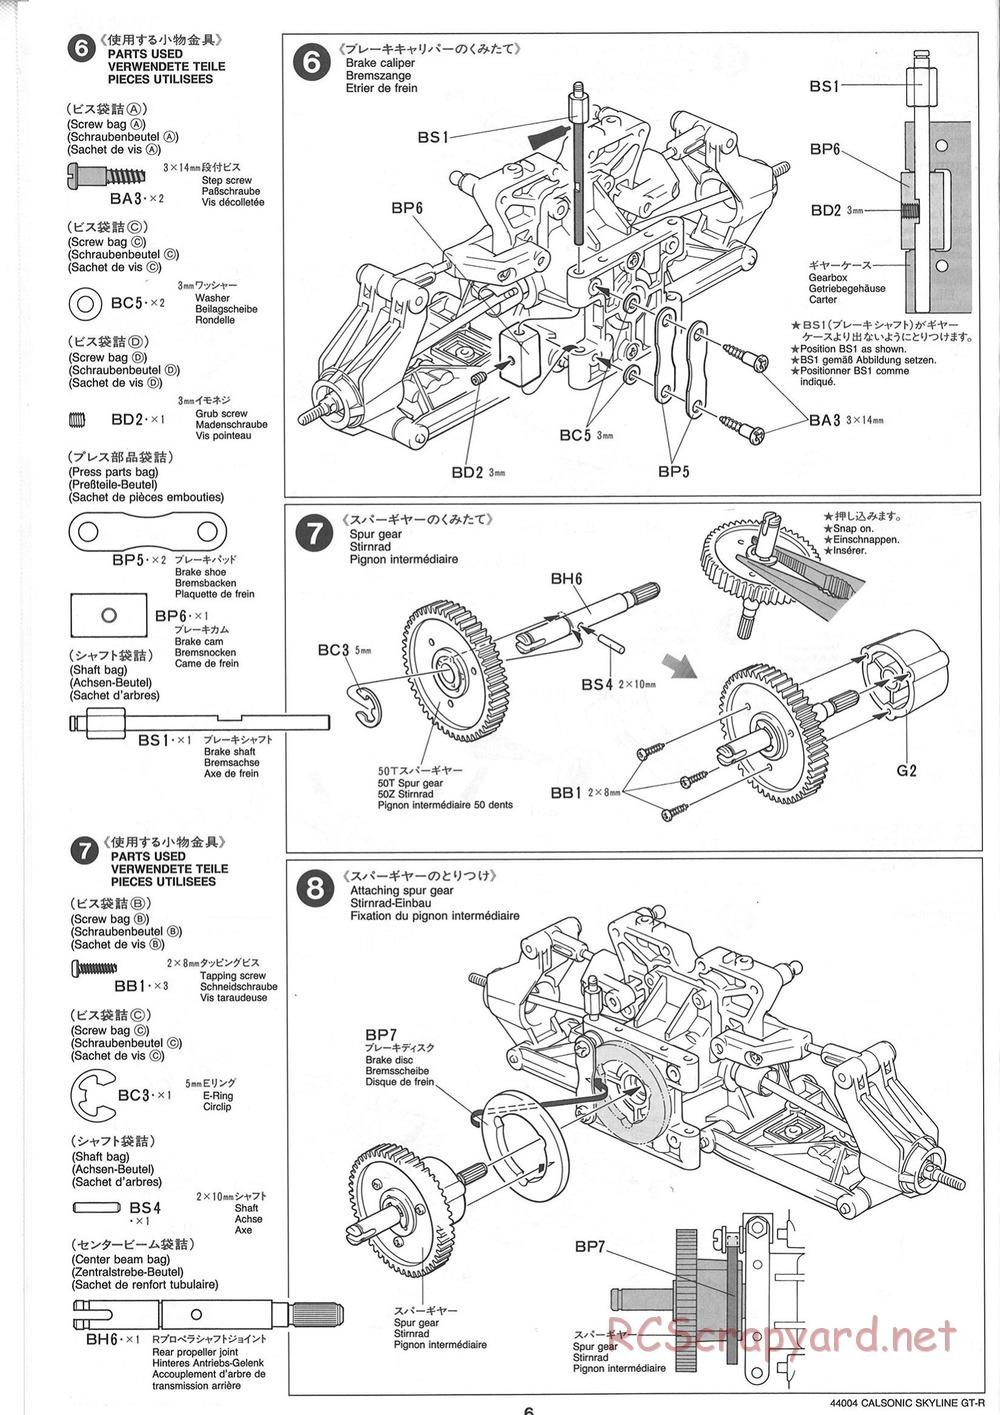 Tamiya - Calsonic GT-R - TGX Mk.1 Chassis - Manual - Page 6